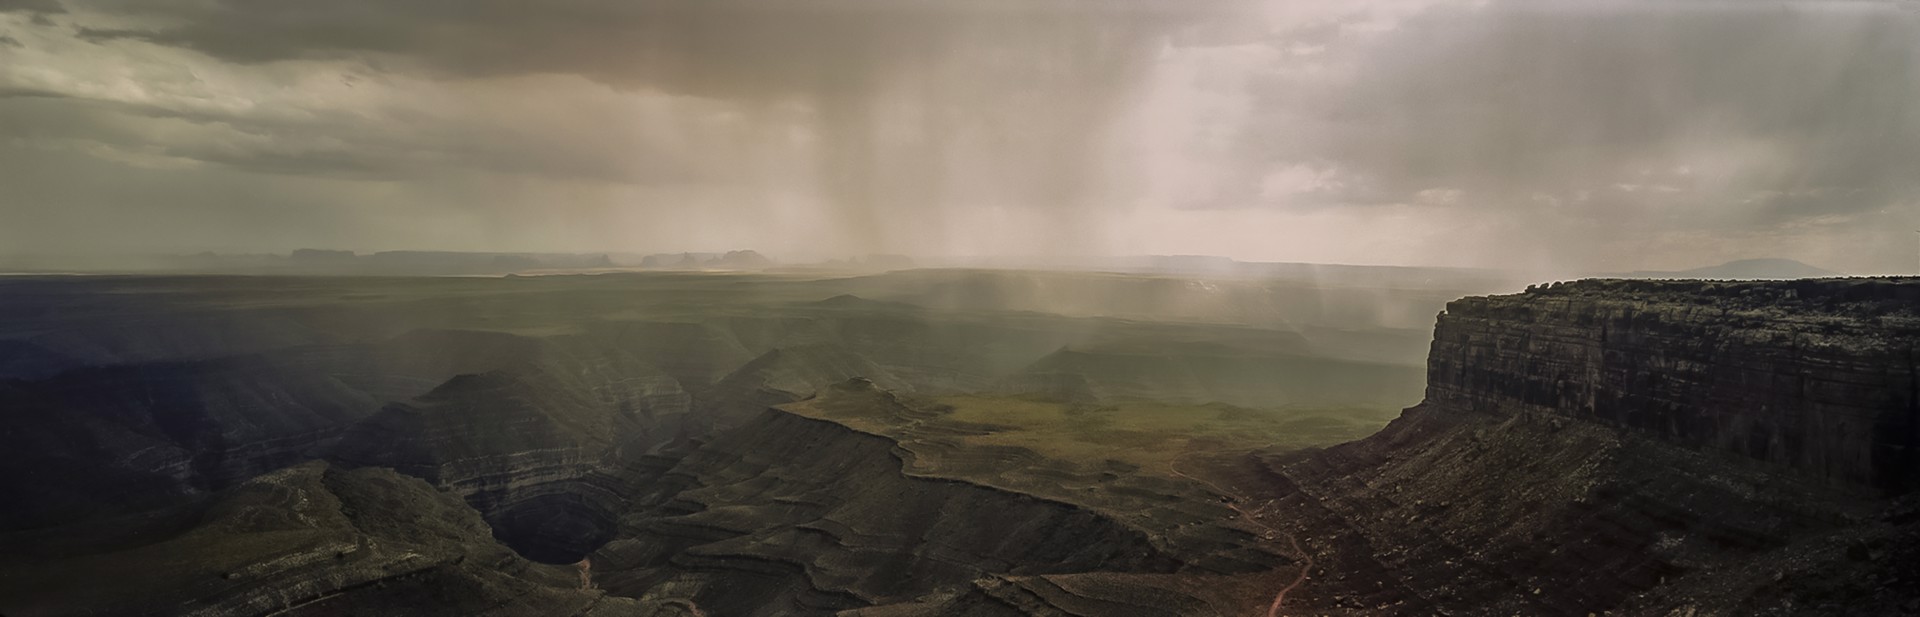 Rain Storm, Muley Point, Utah by Lawrence McFarland